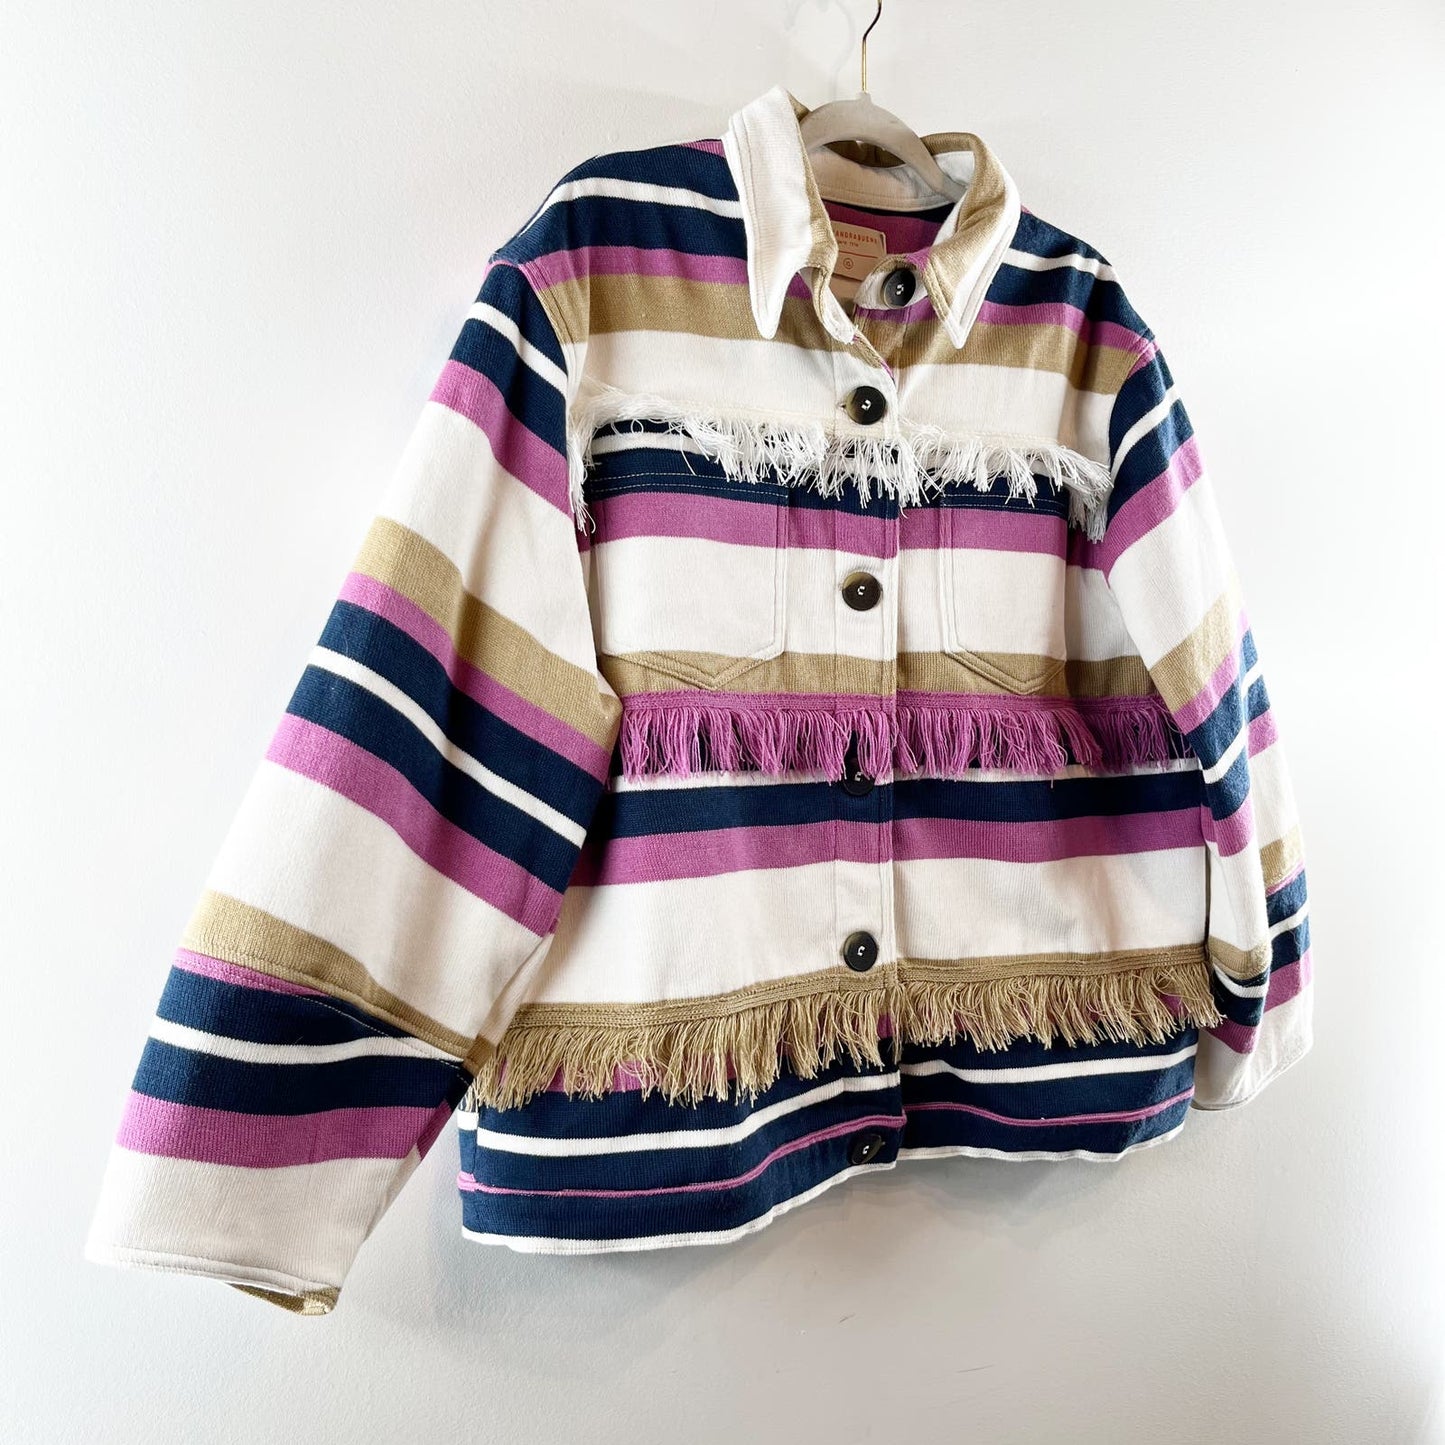 Alexandra Bueno Fringed Striped Blazer Coat Jacket Cream Pink Blue XL